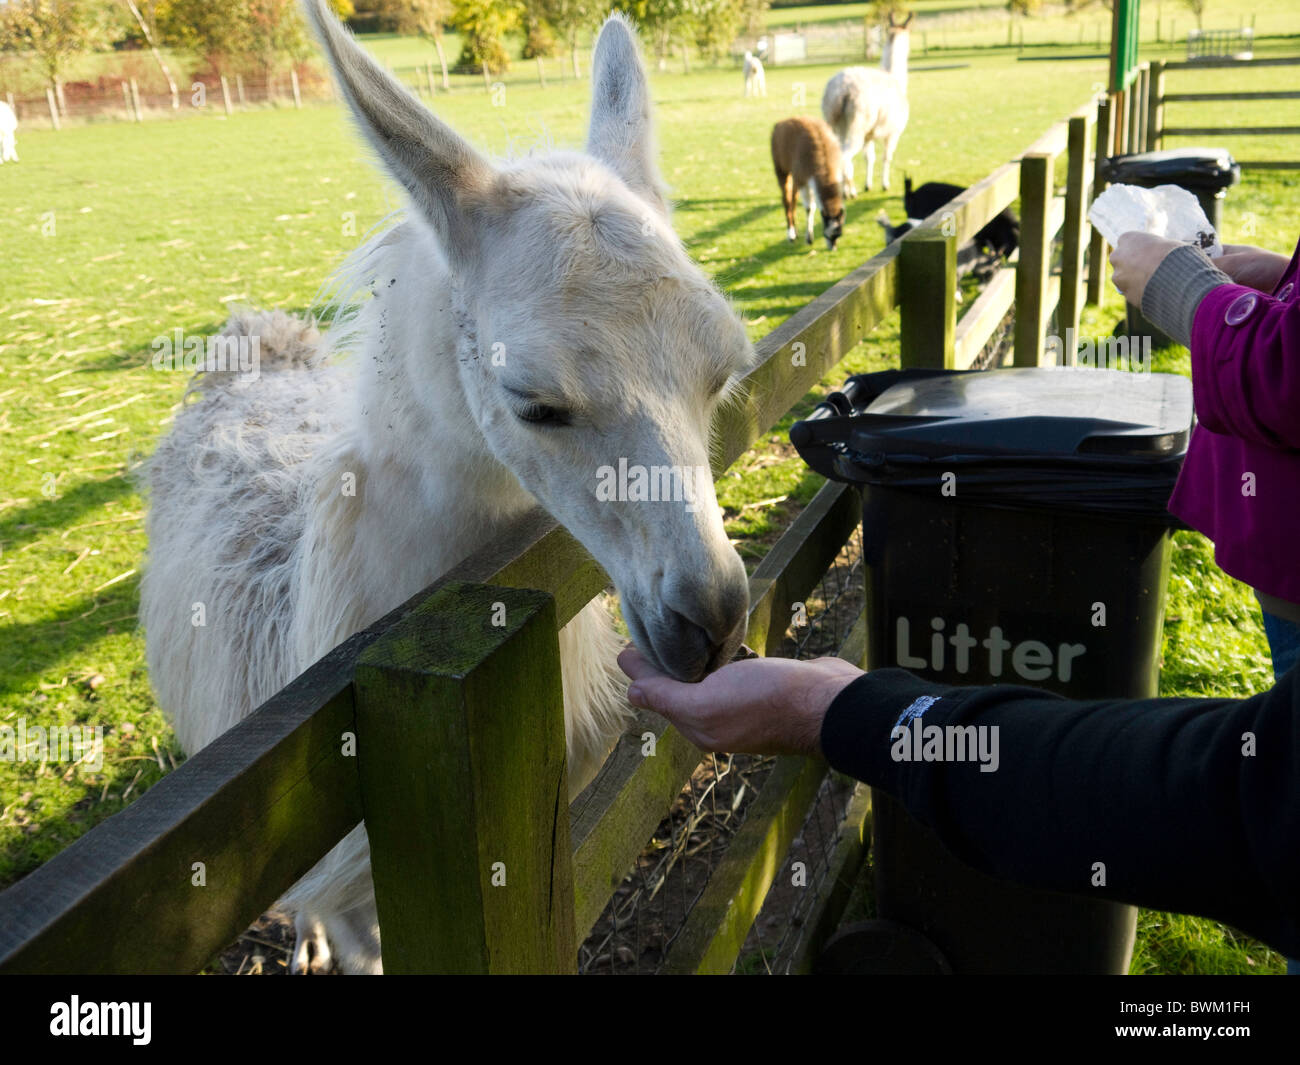 Llama being fed at Whitepost farm, Farnsfield, Notts Stock Photo